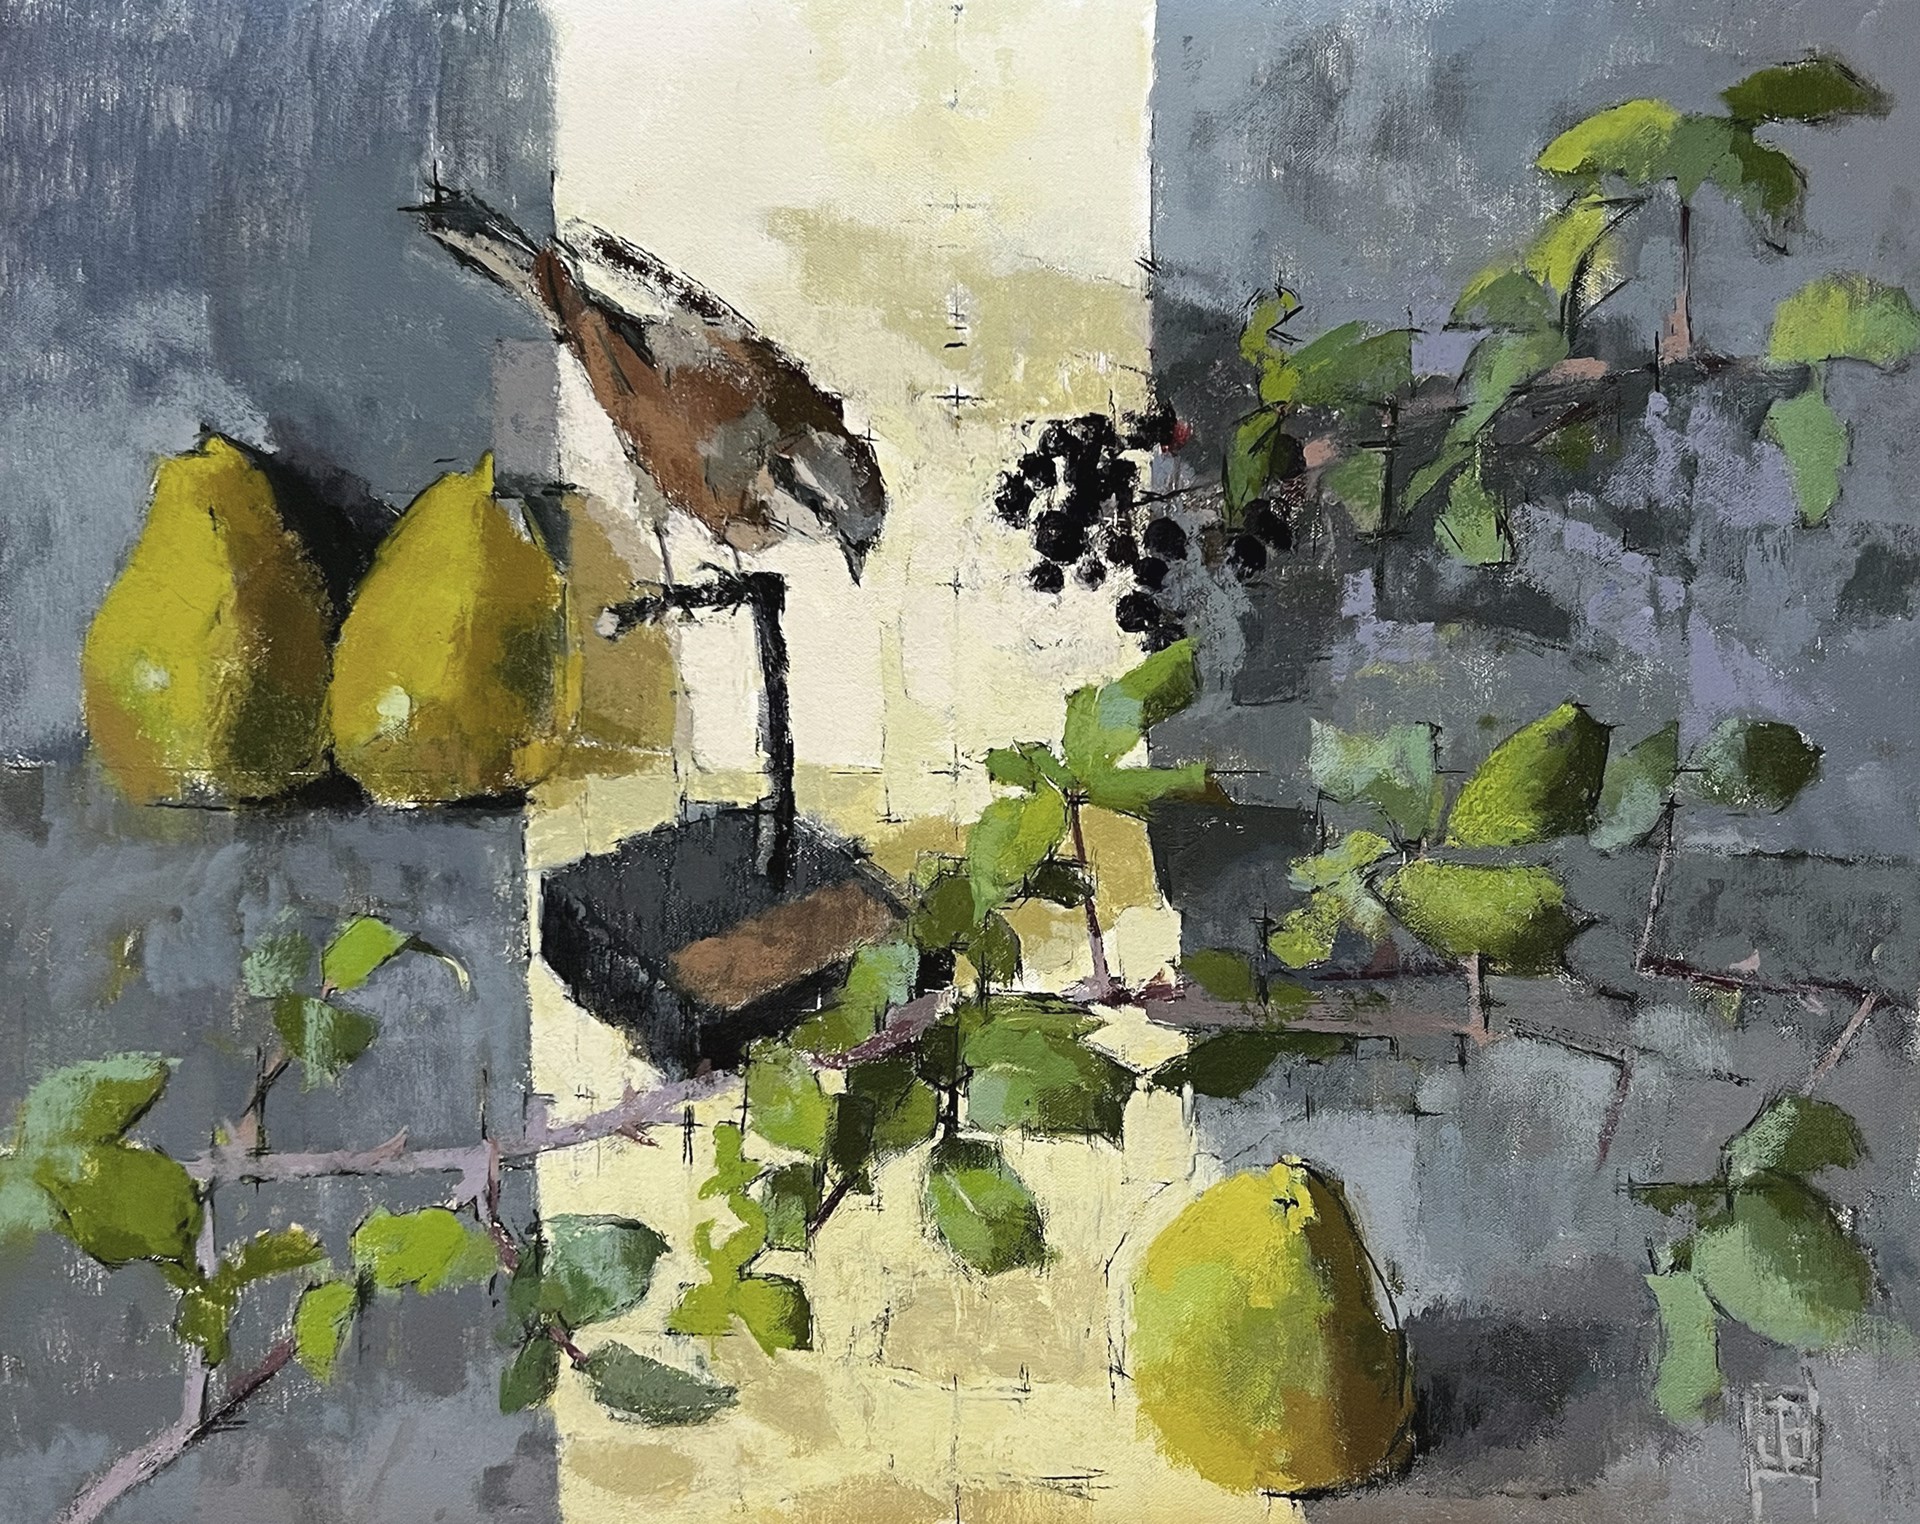 Bramble with Bird by Jill Barthorpe